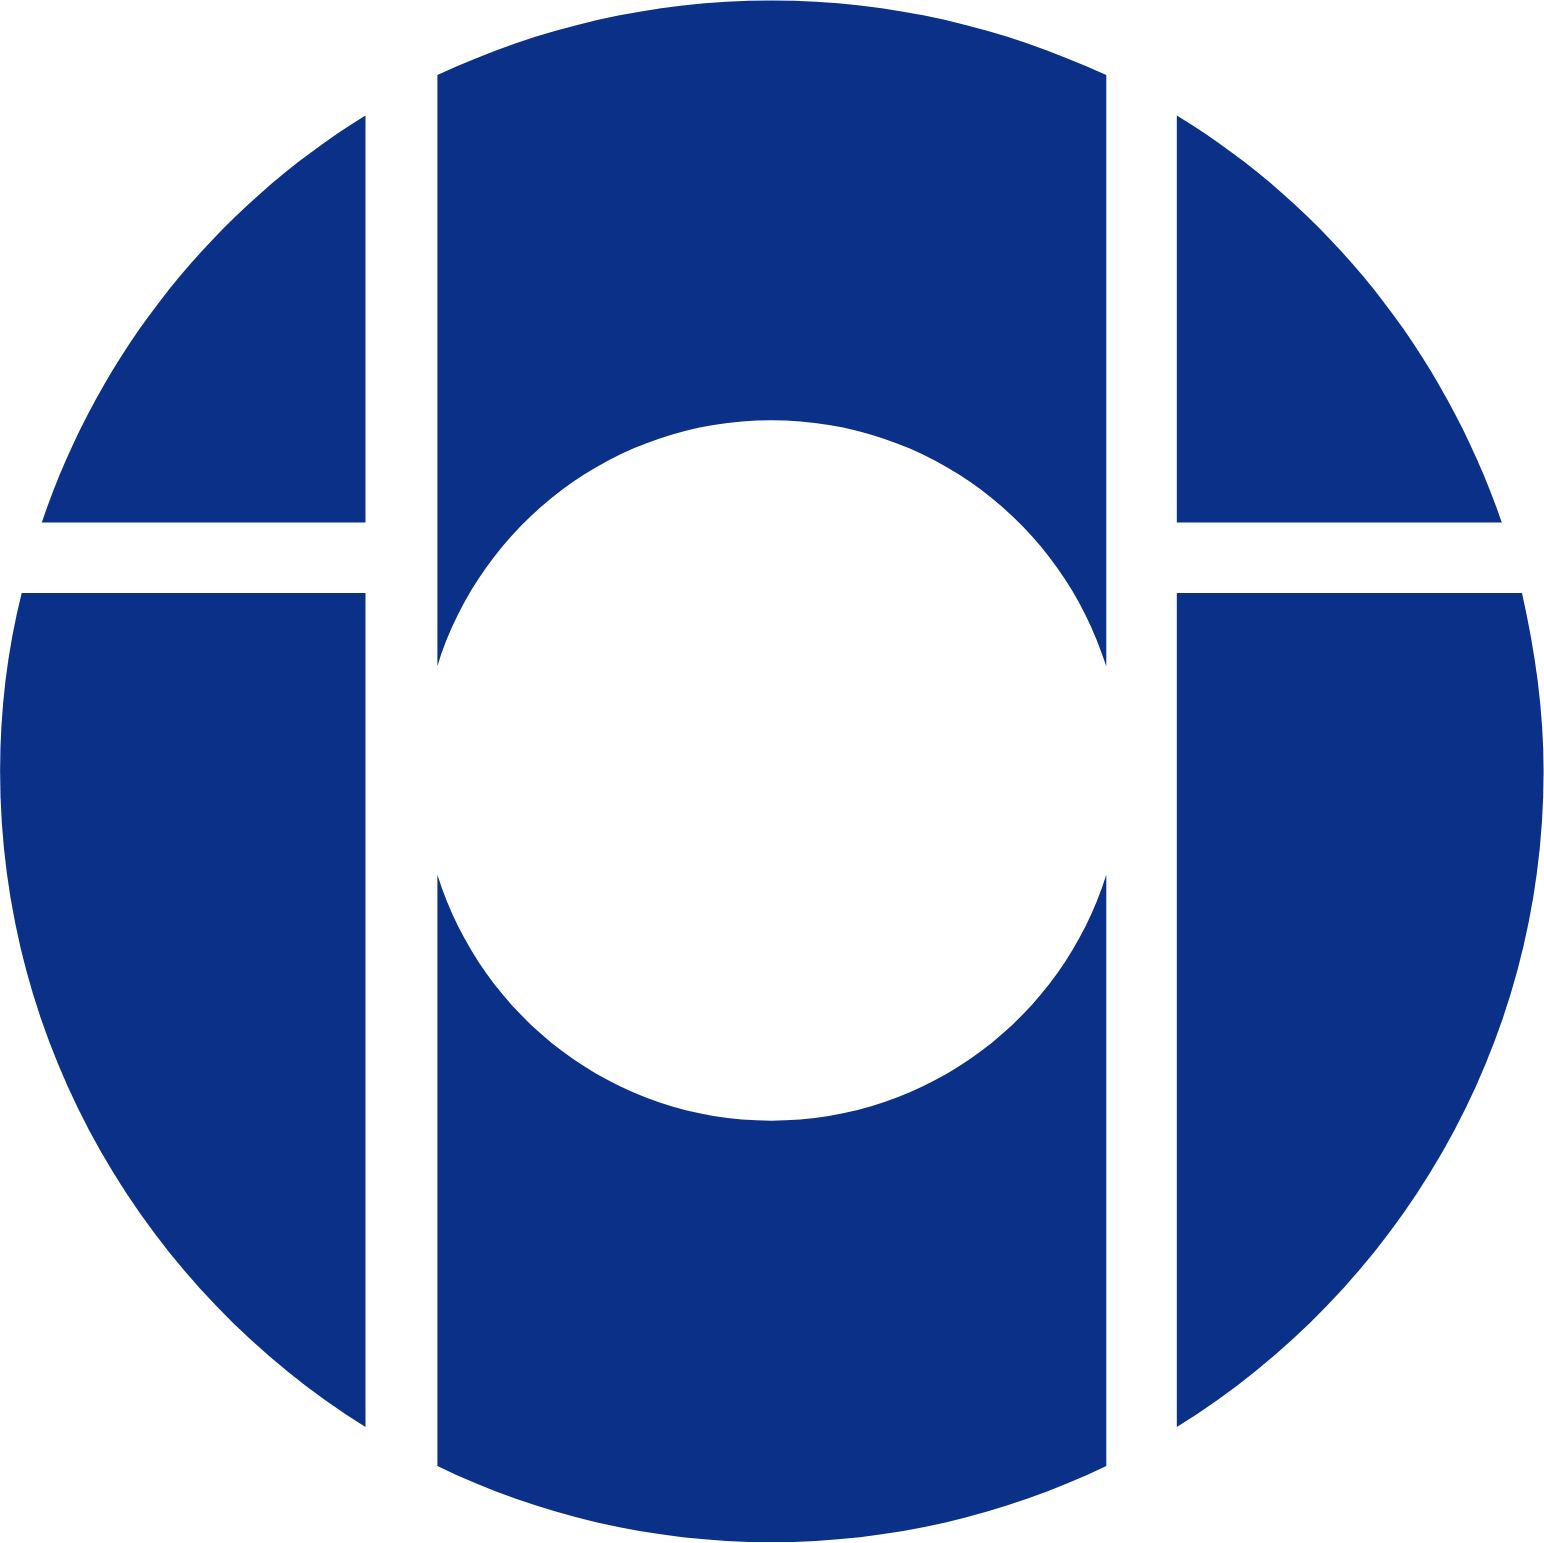 IOI Corporation Berhad logo (PNG transparent)